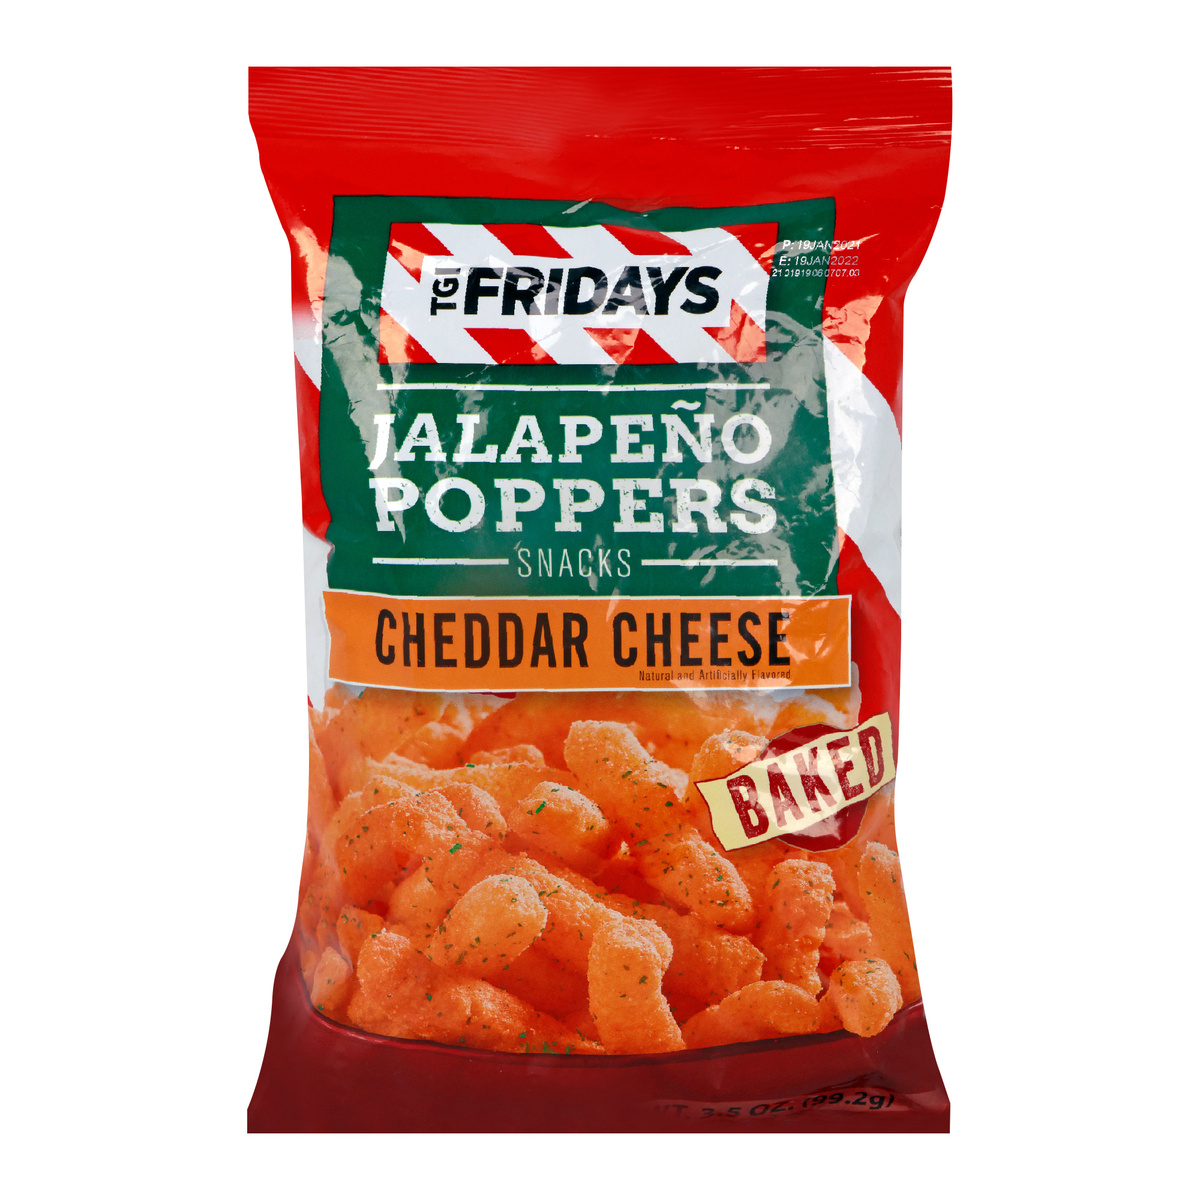 TGI Fridays Jalapeno Poppers Snacks Cheddar Cheese 99.2 g